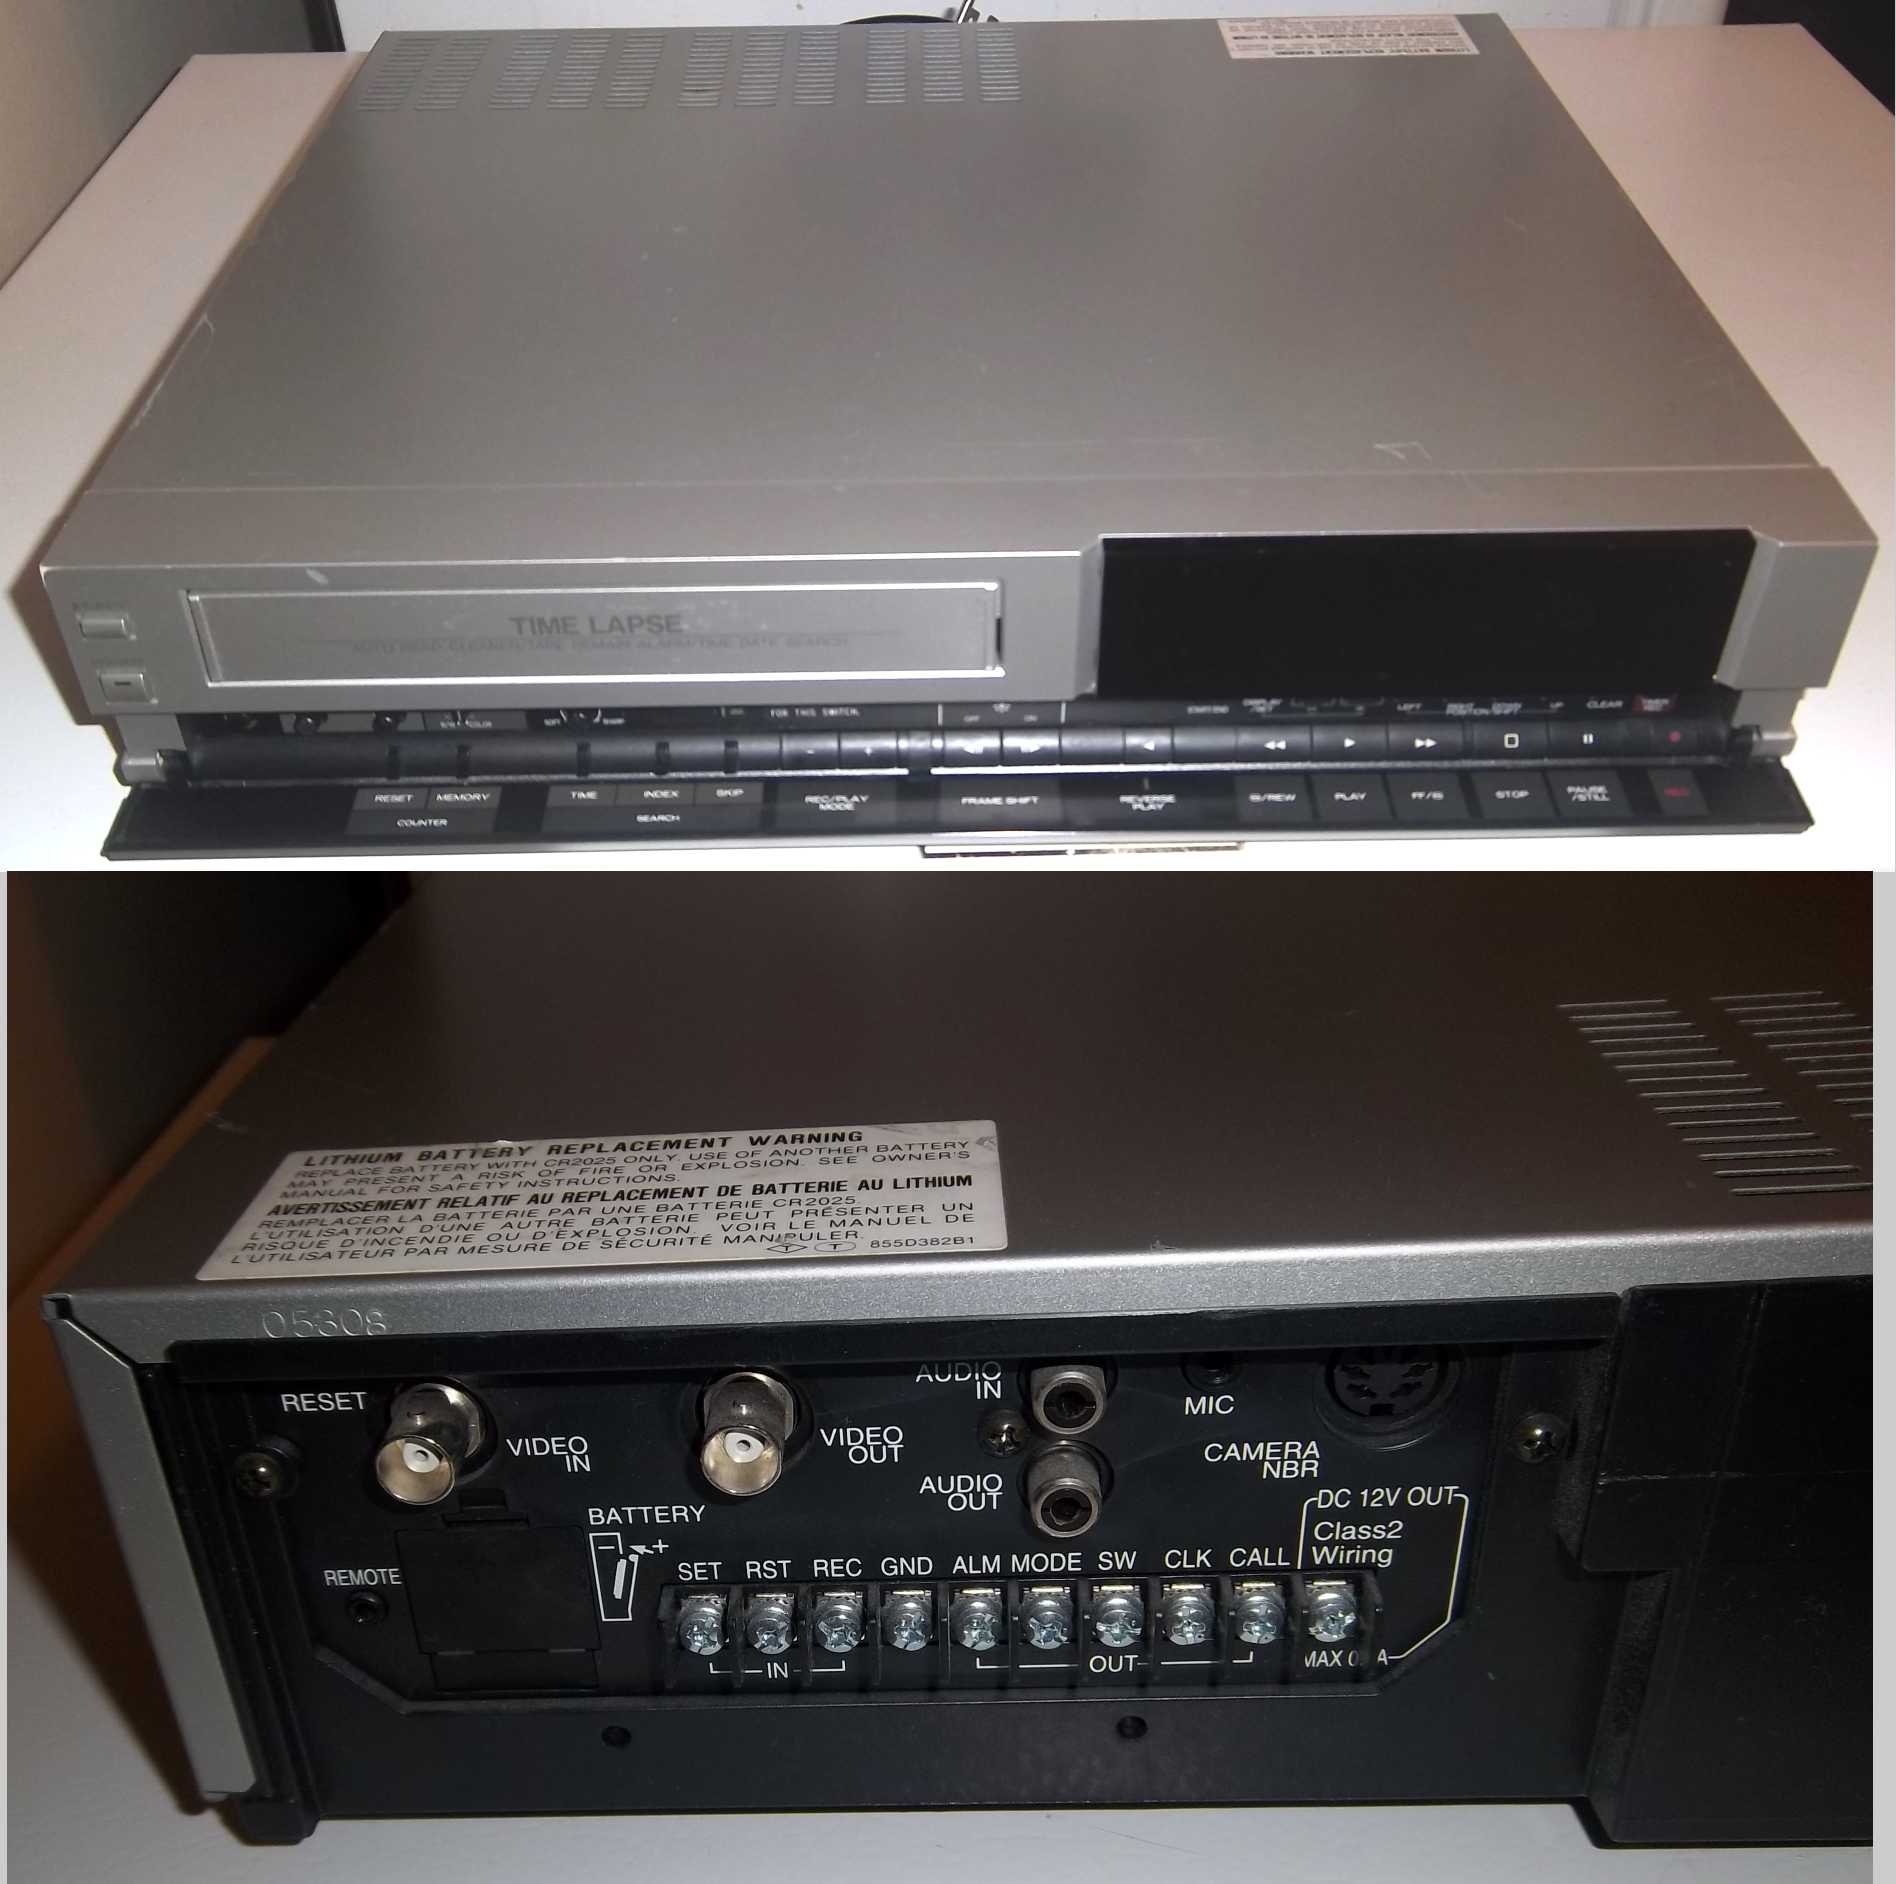 Mitsubishi SVHS - HS5300 Time Lapse Recorder